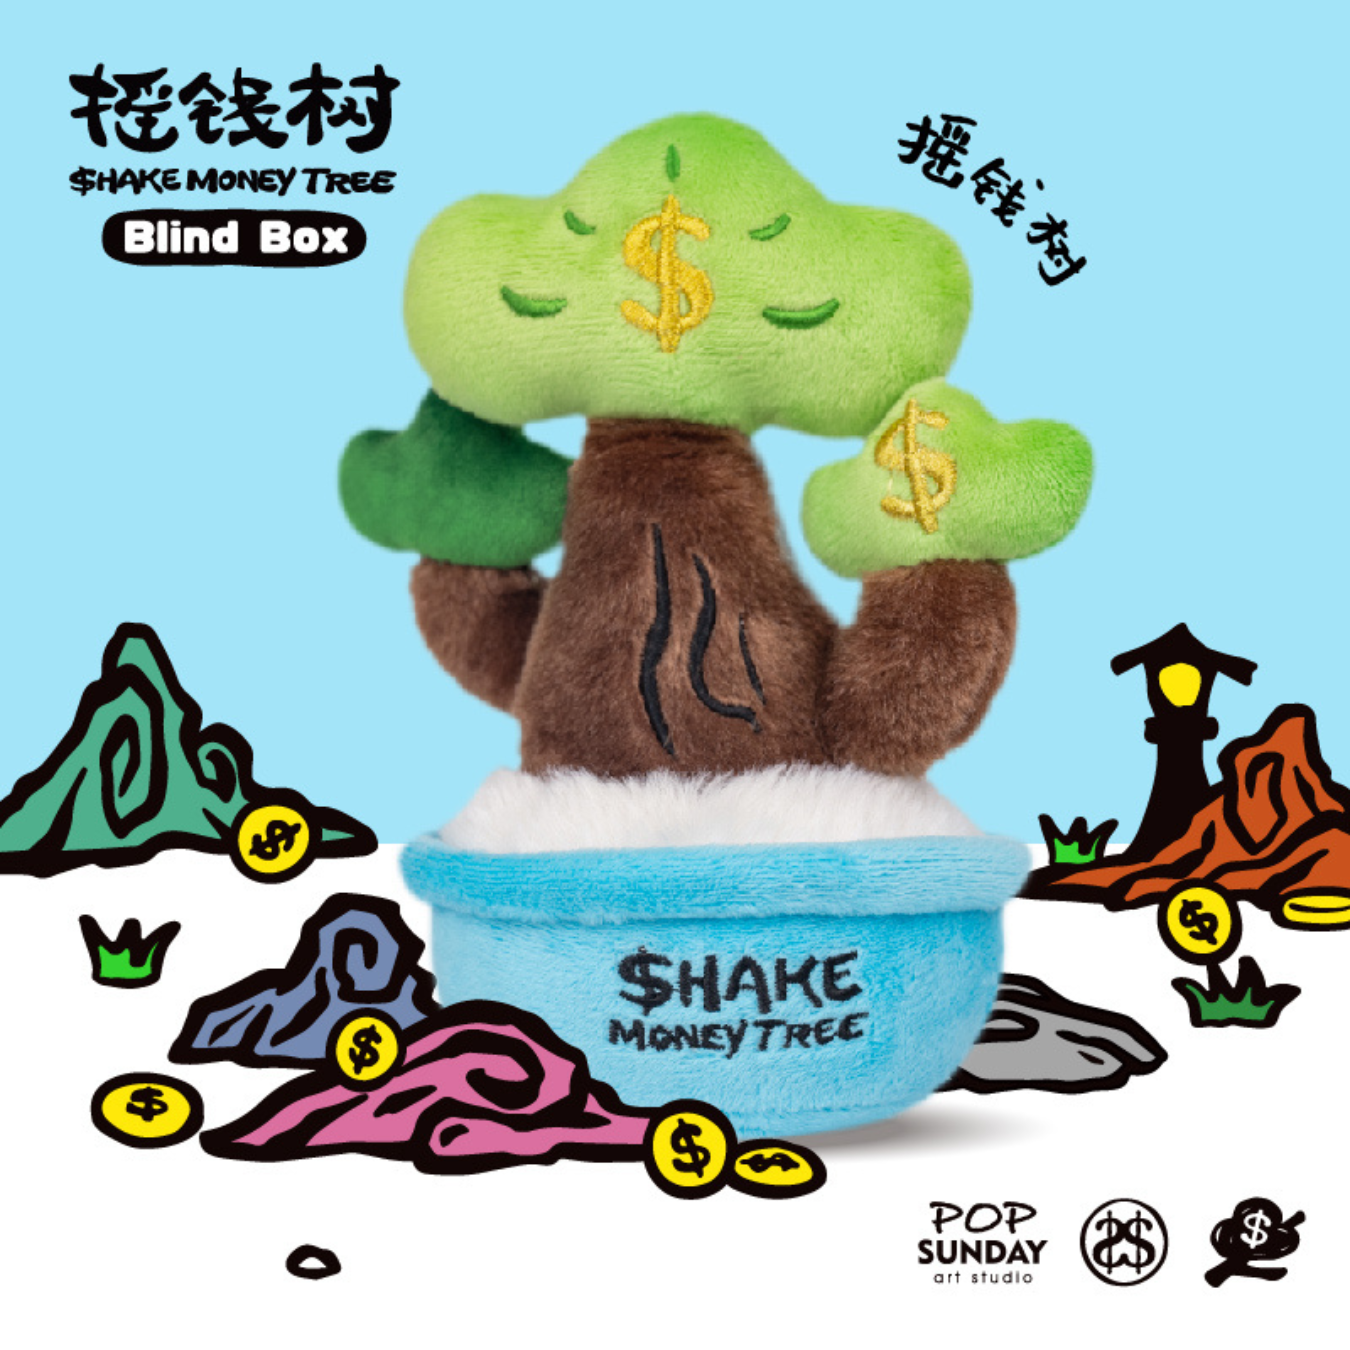 Top Toy $hake Money Tree Bonsai Blind Box Plush